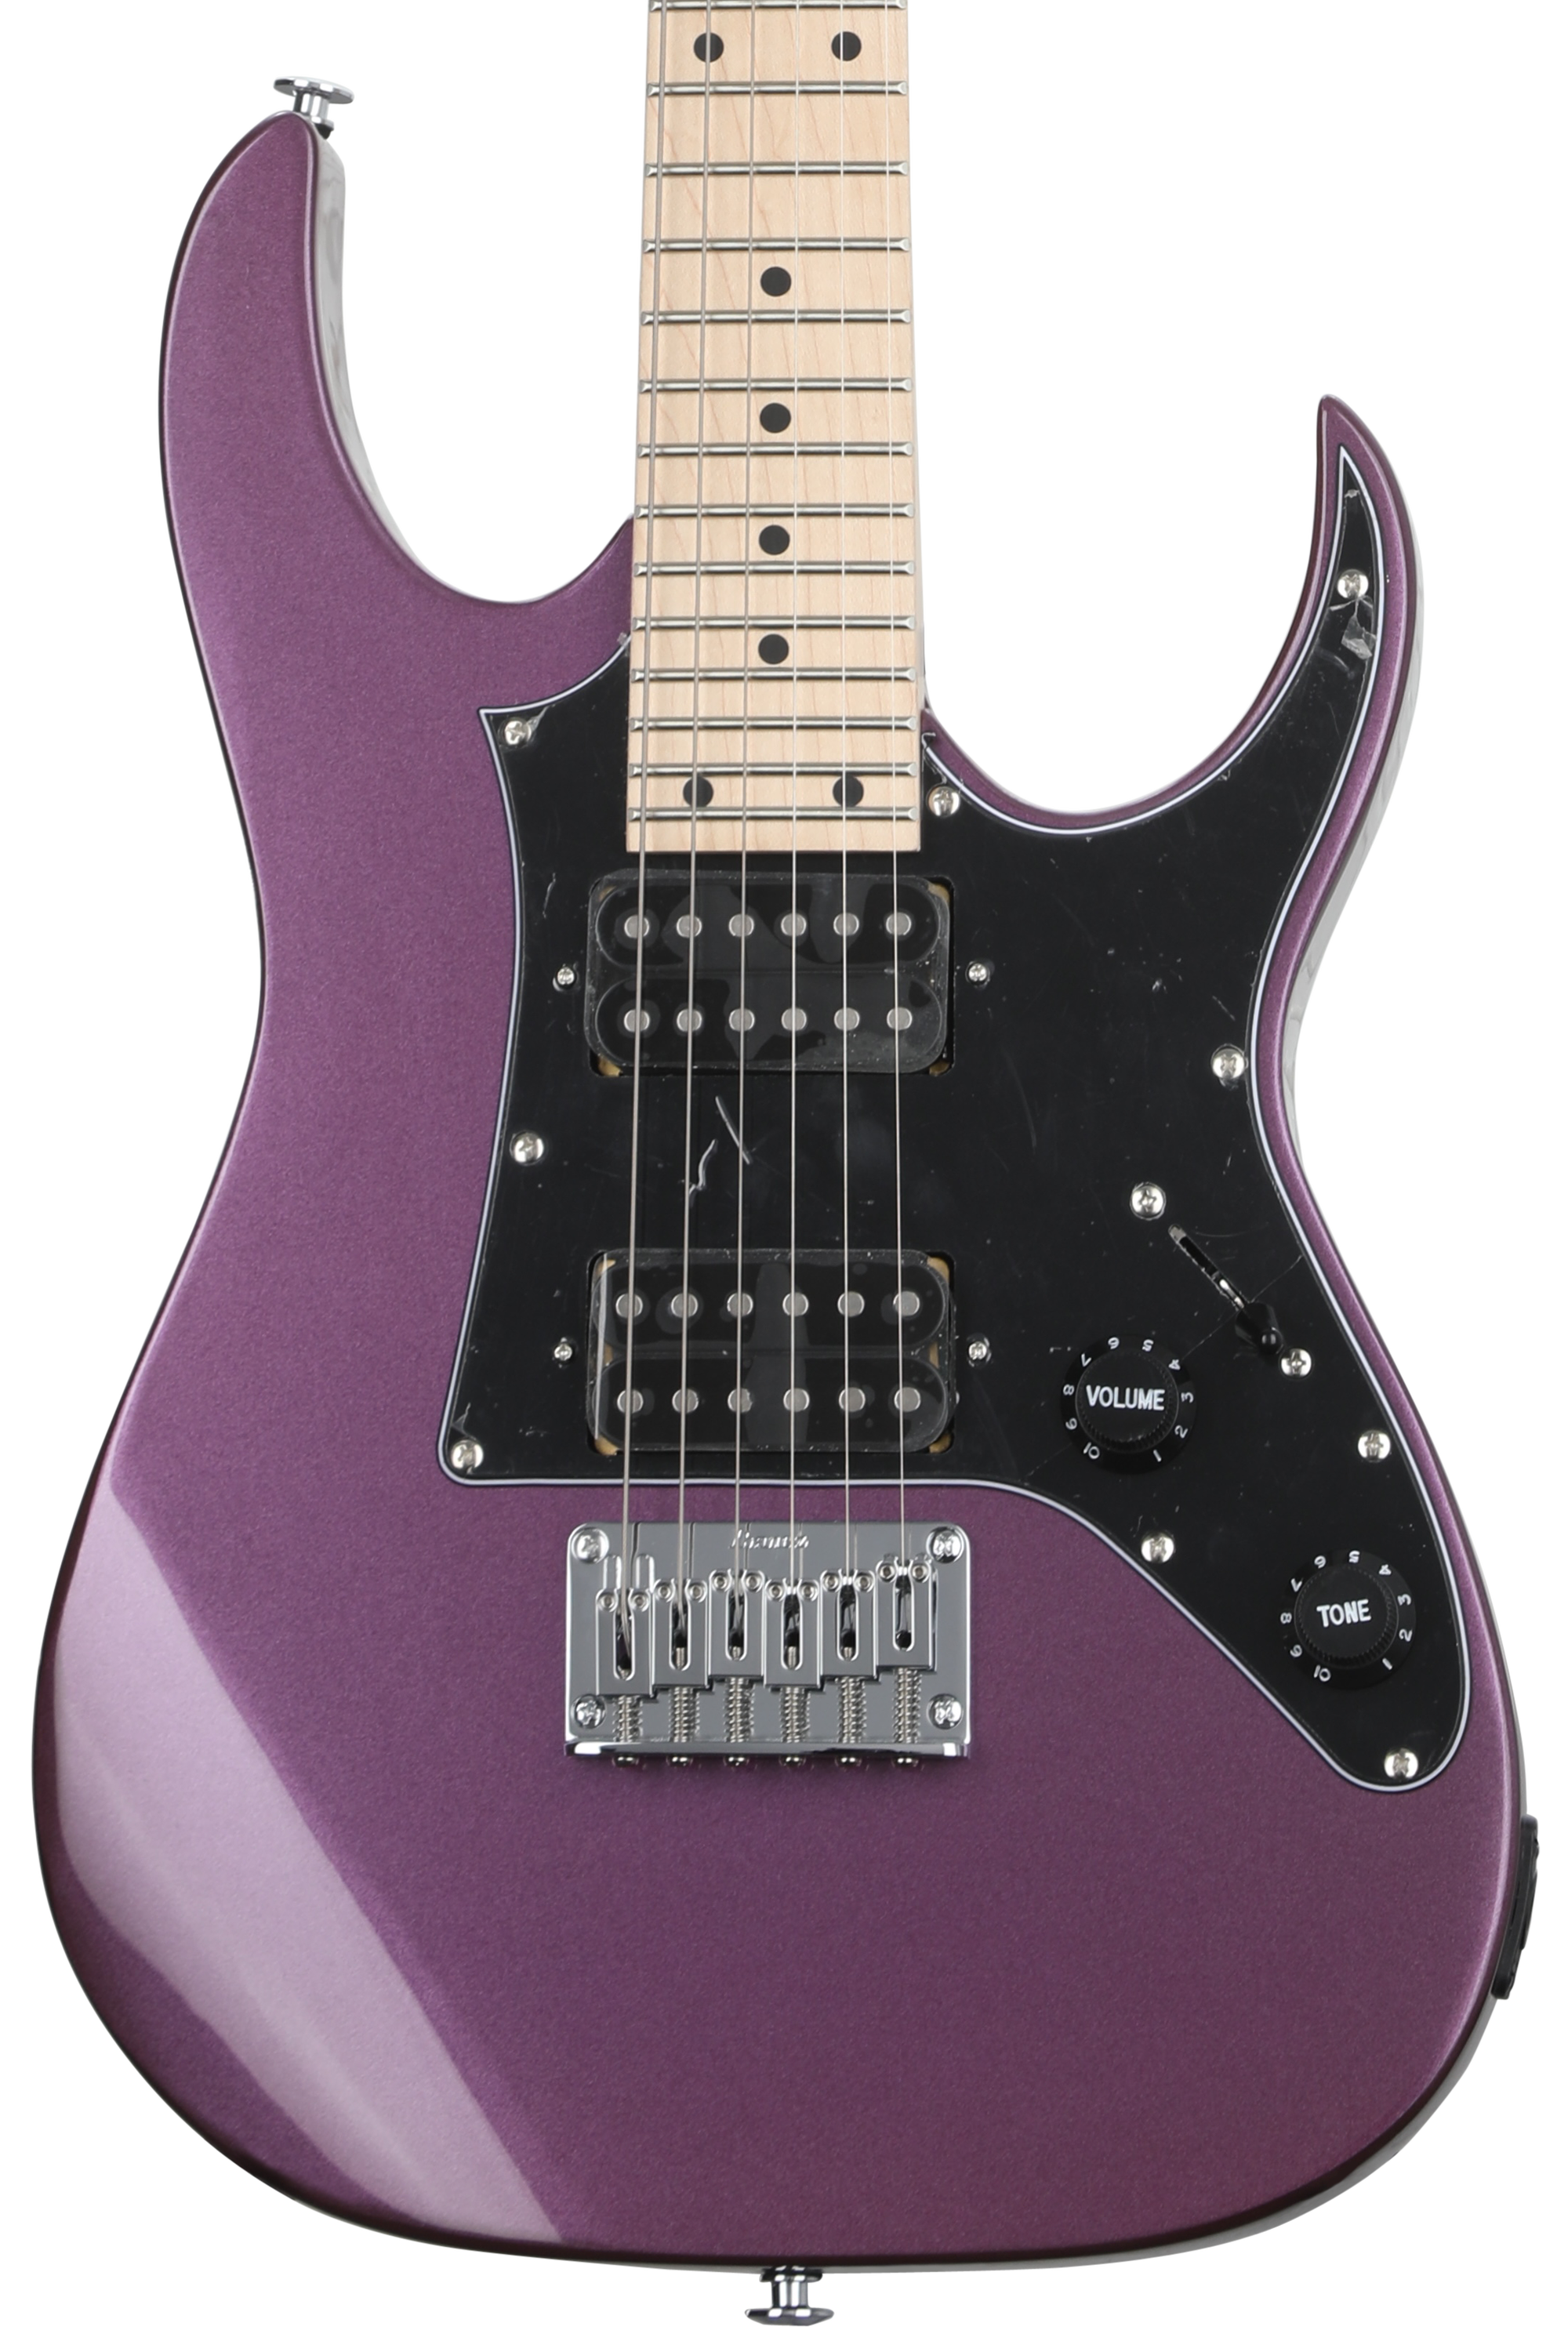 Bundled Item: Ibanez miKro GRGM21M Electric Guitar - Metallic Purple